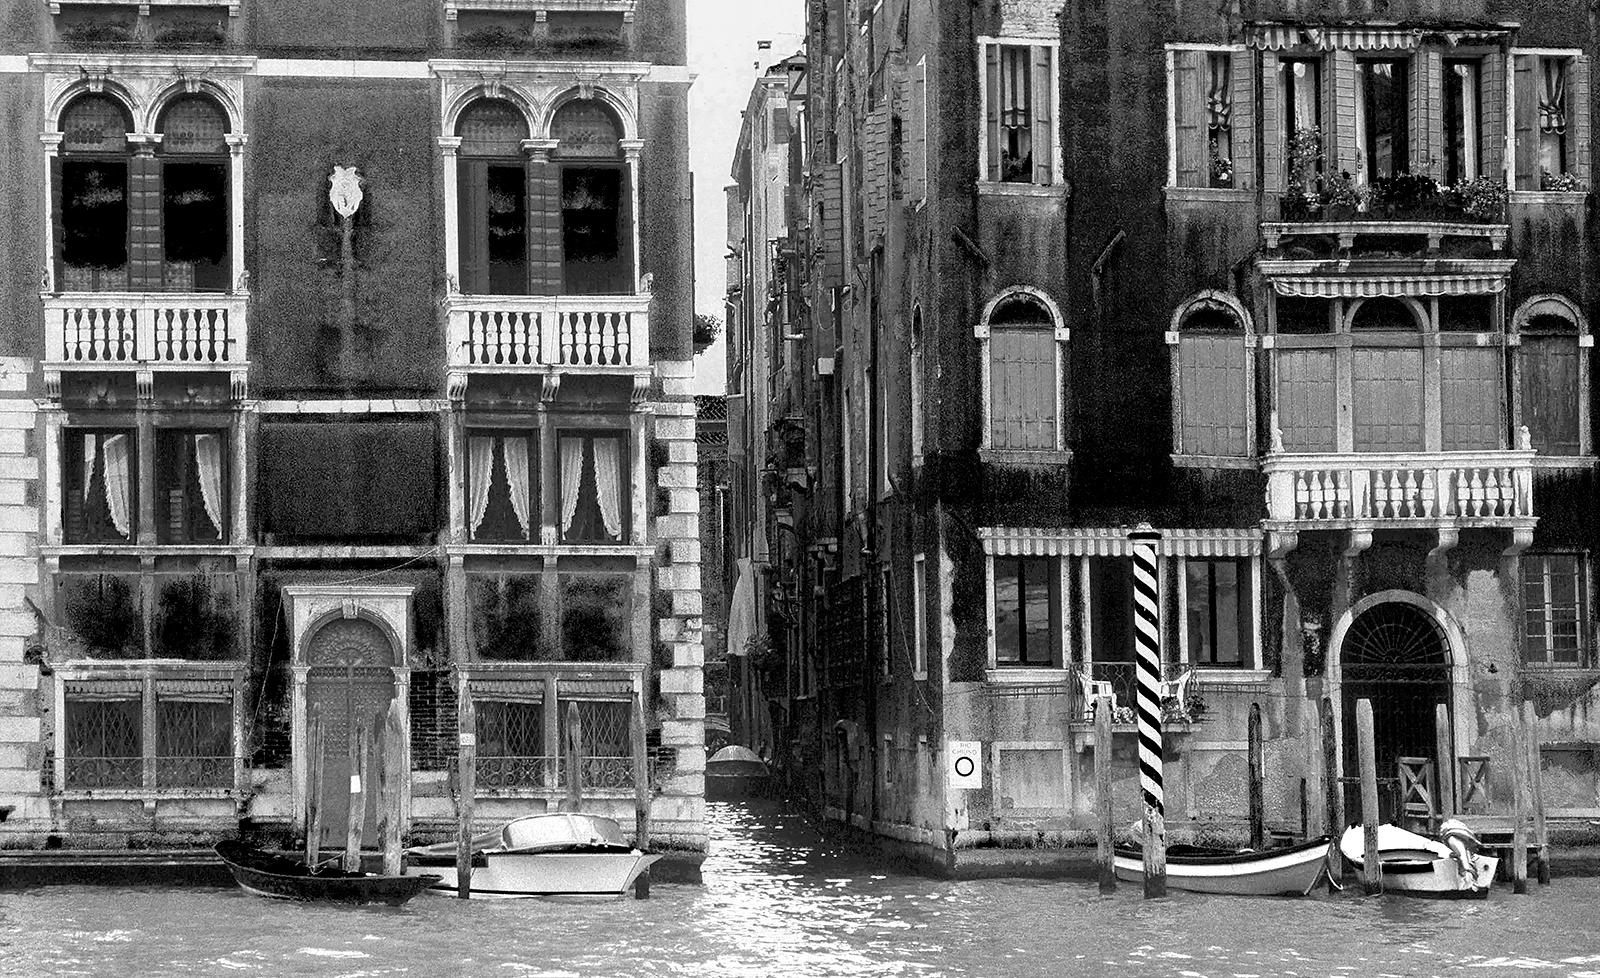 Venice 2 - Signed limited edition fine art print, Black white, Landscape, City - Photograph by Ian Sanderson